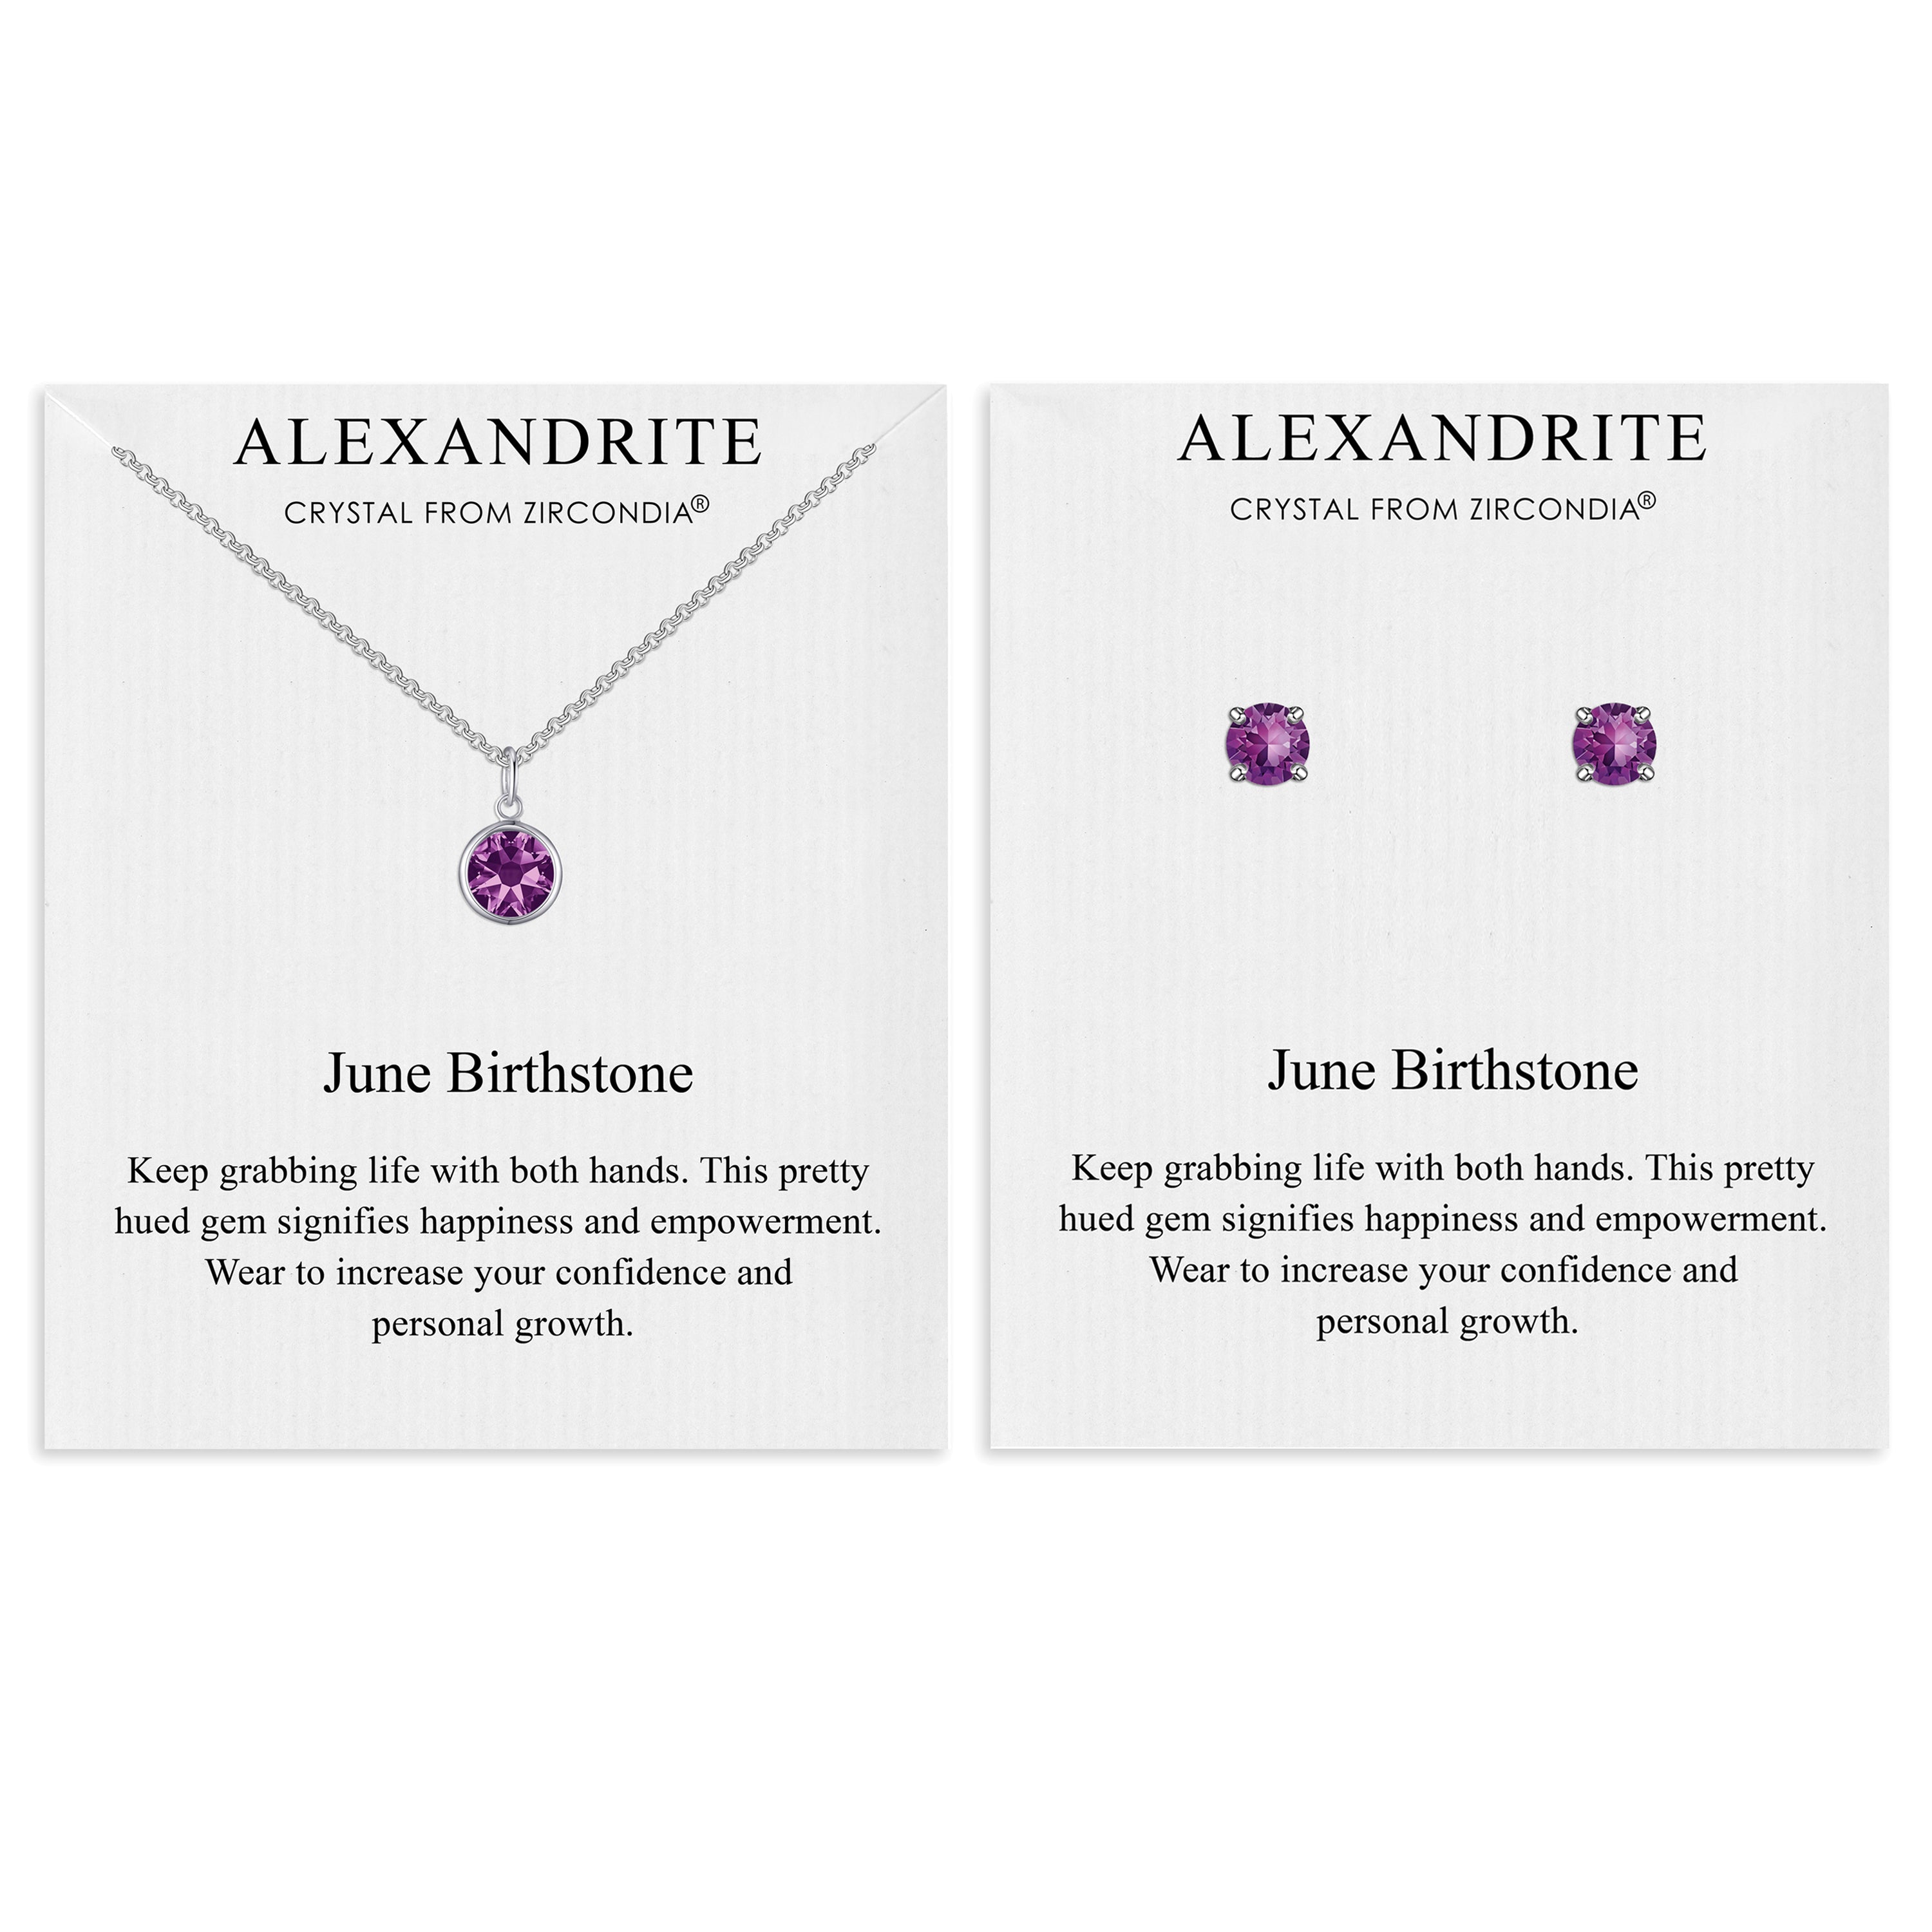 June (Alexandrite) Birthstone Necklace & Earrings Set Created with Zircondia® Crystals by Philip Jones Jewellery